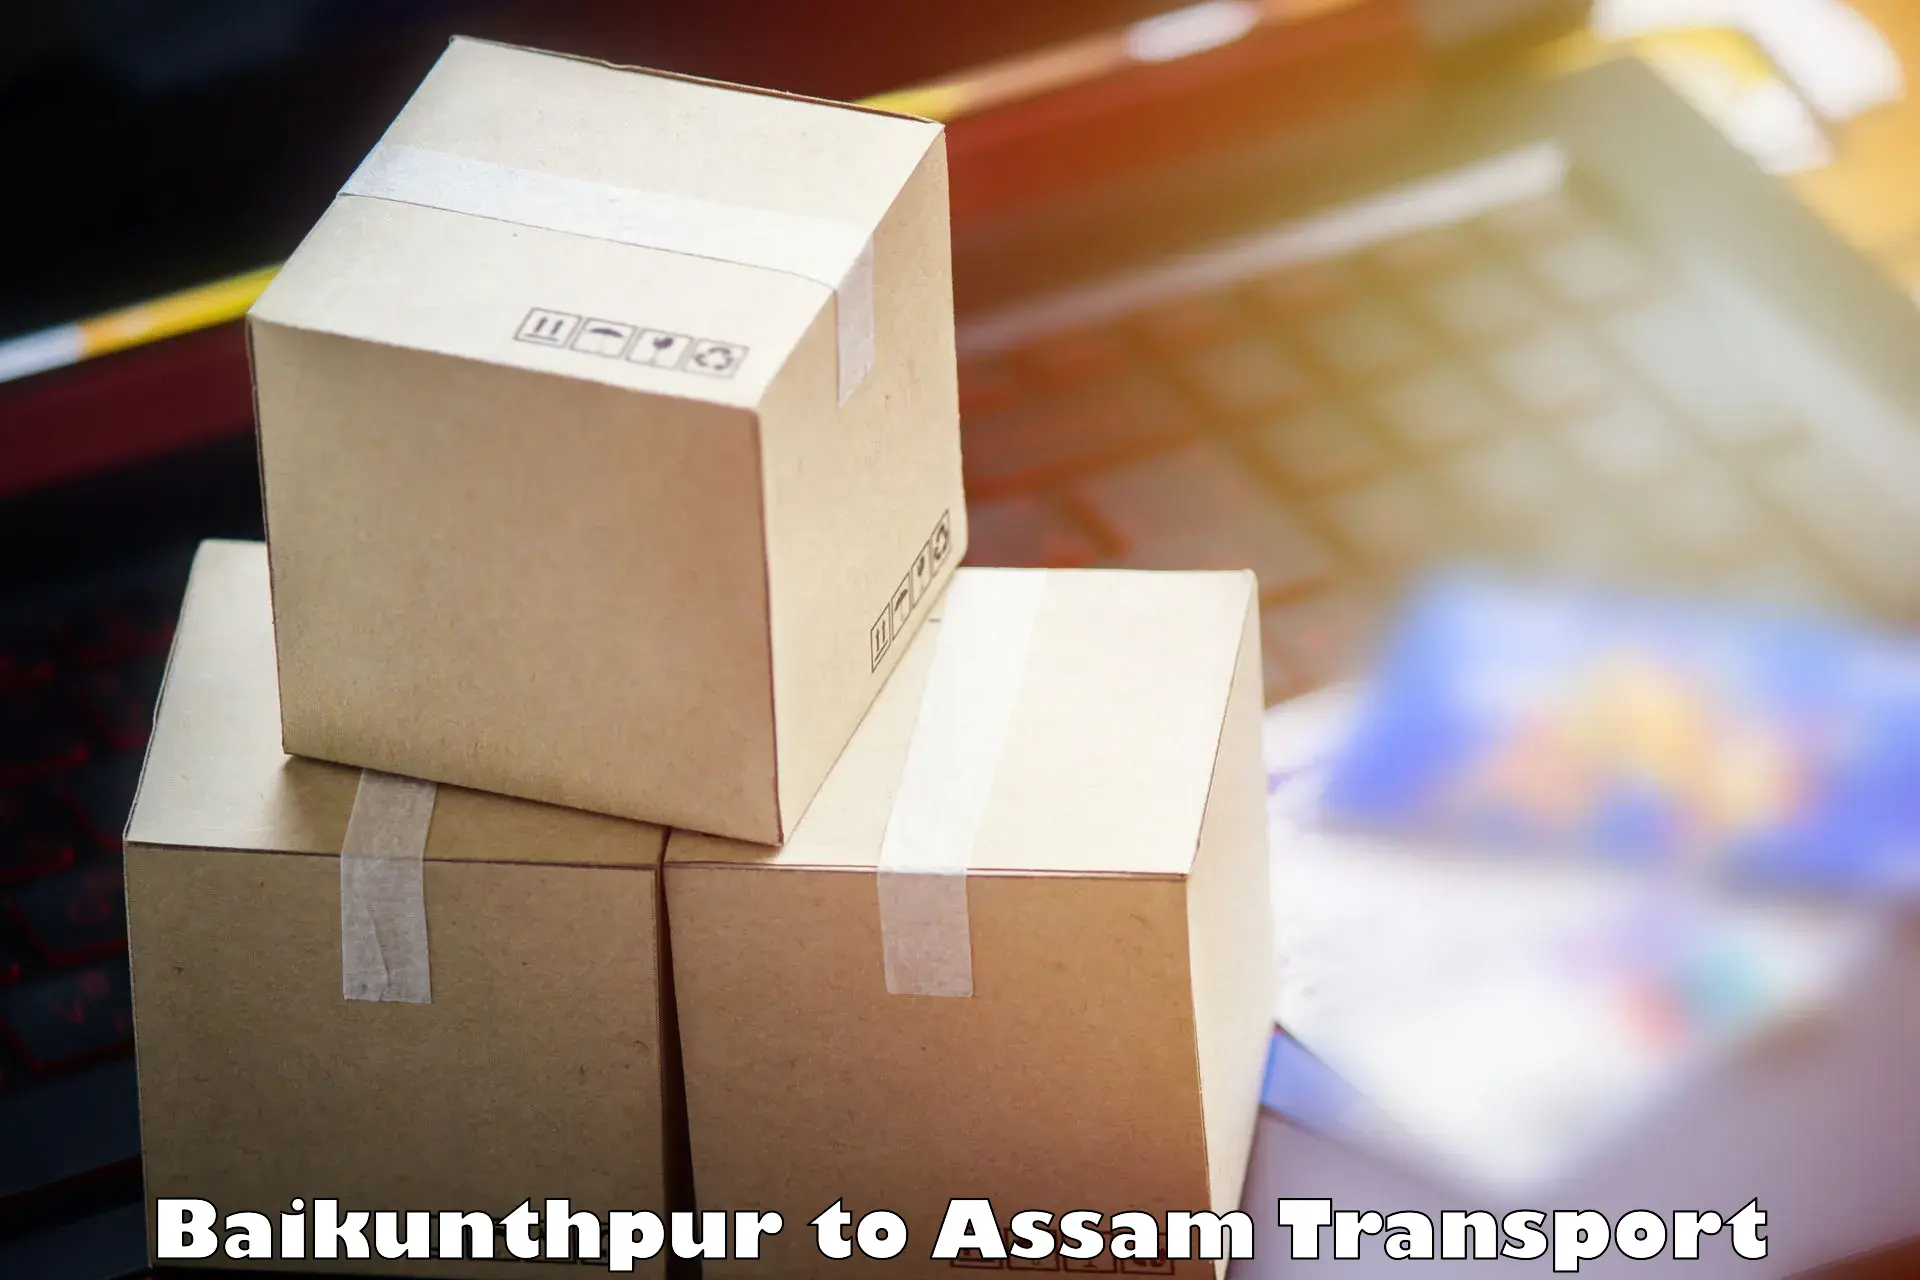 Container transport service Baikunthpur to Dhubri